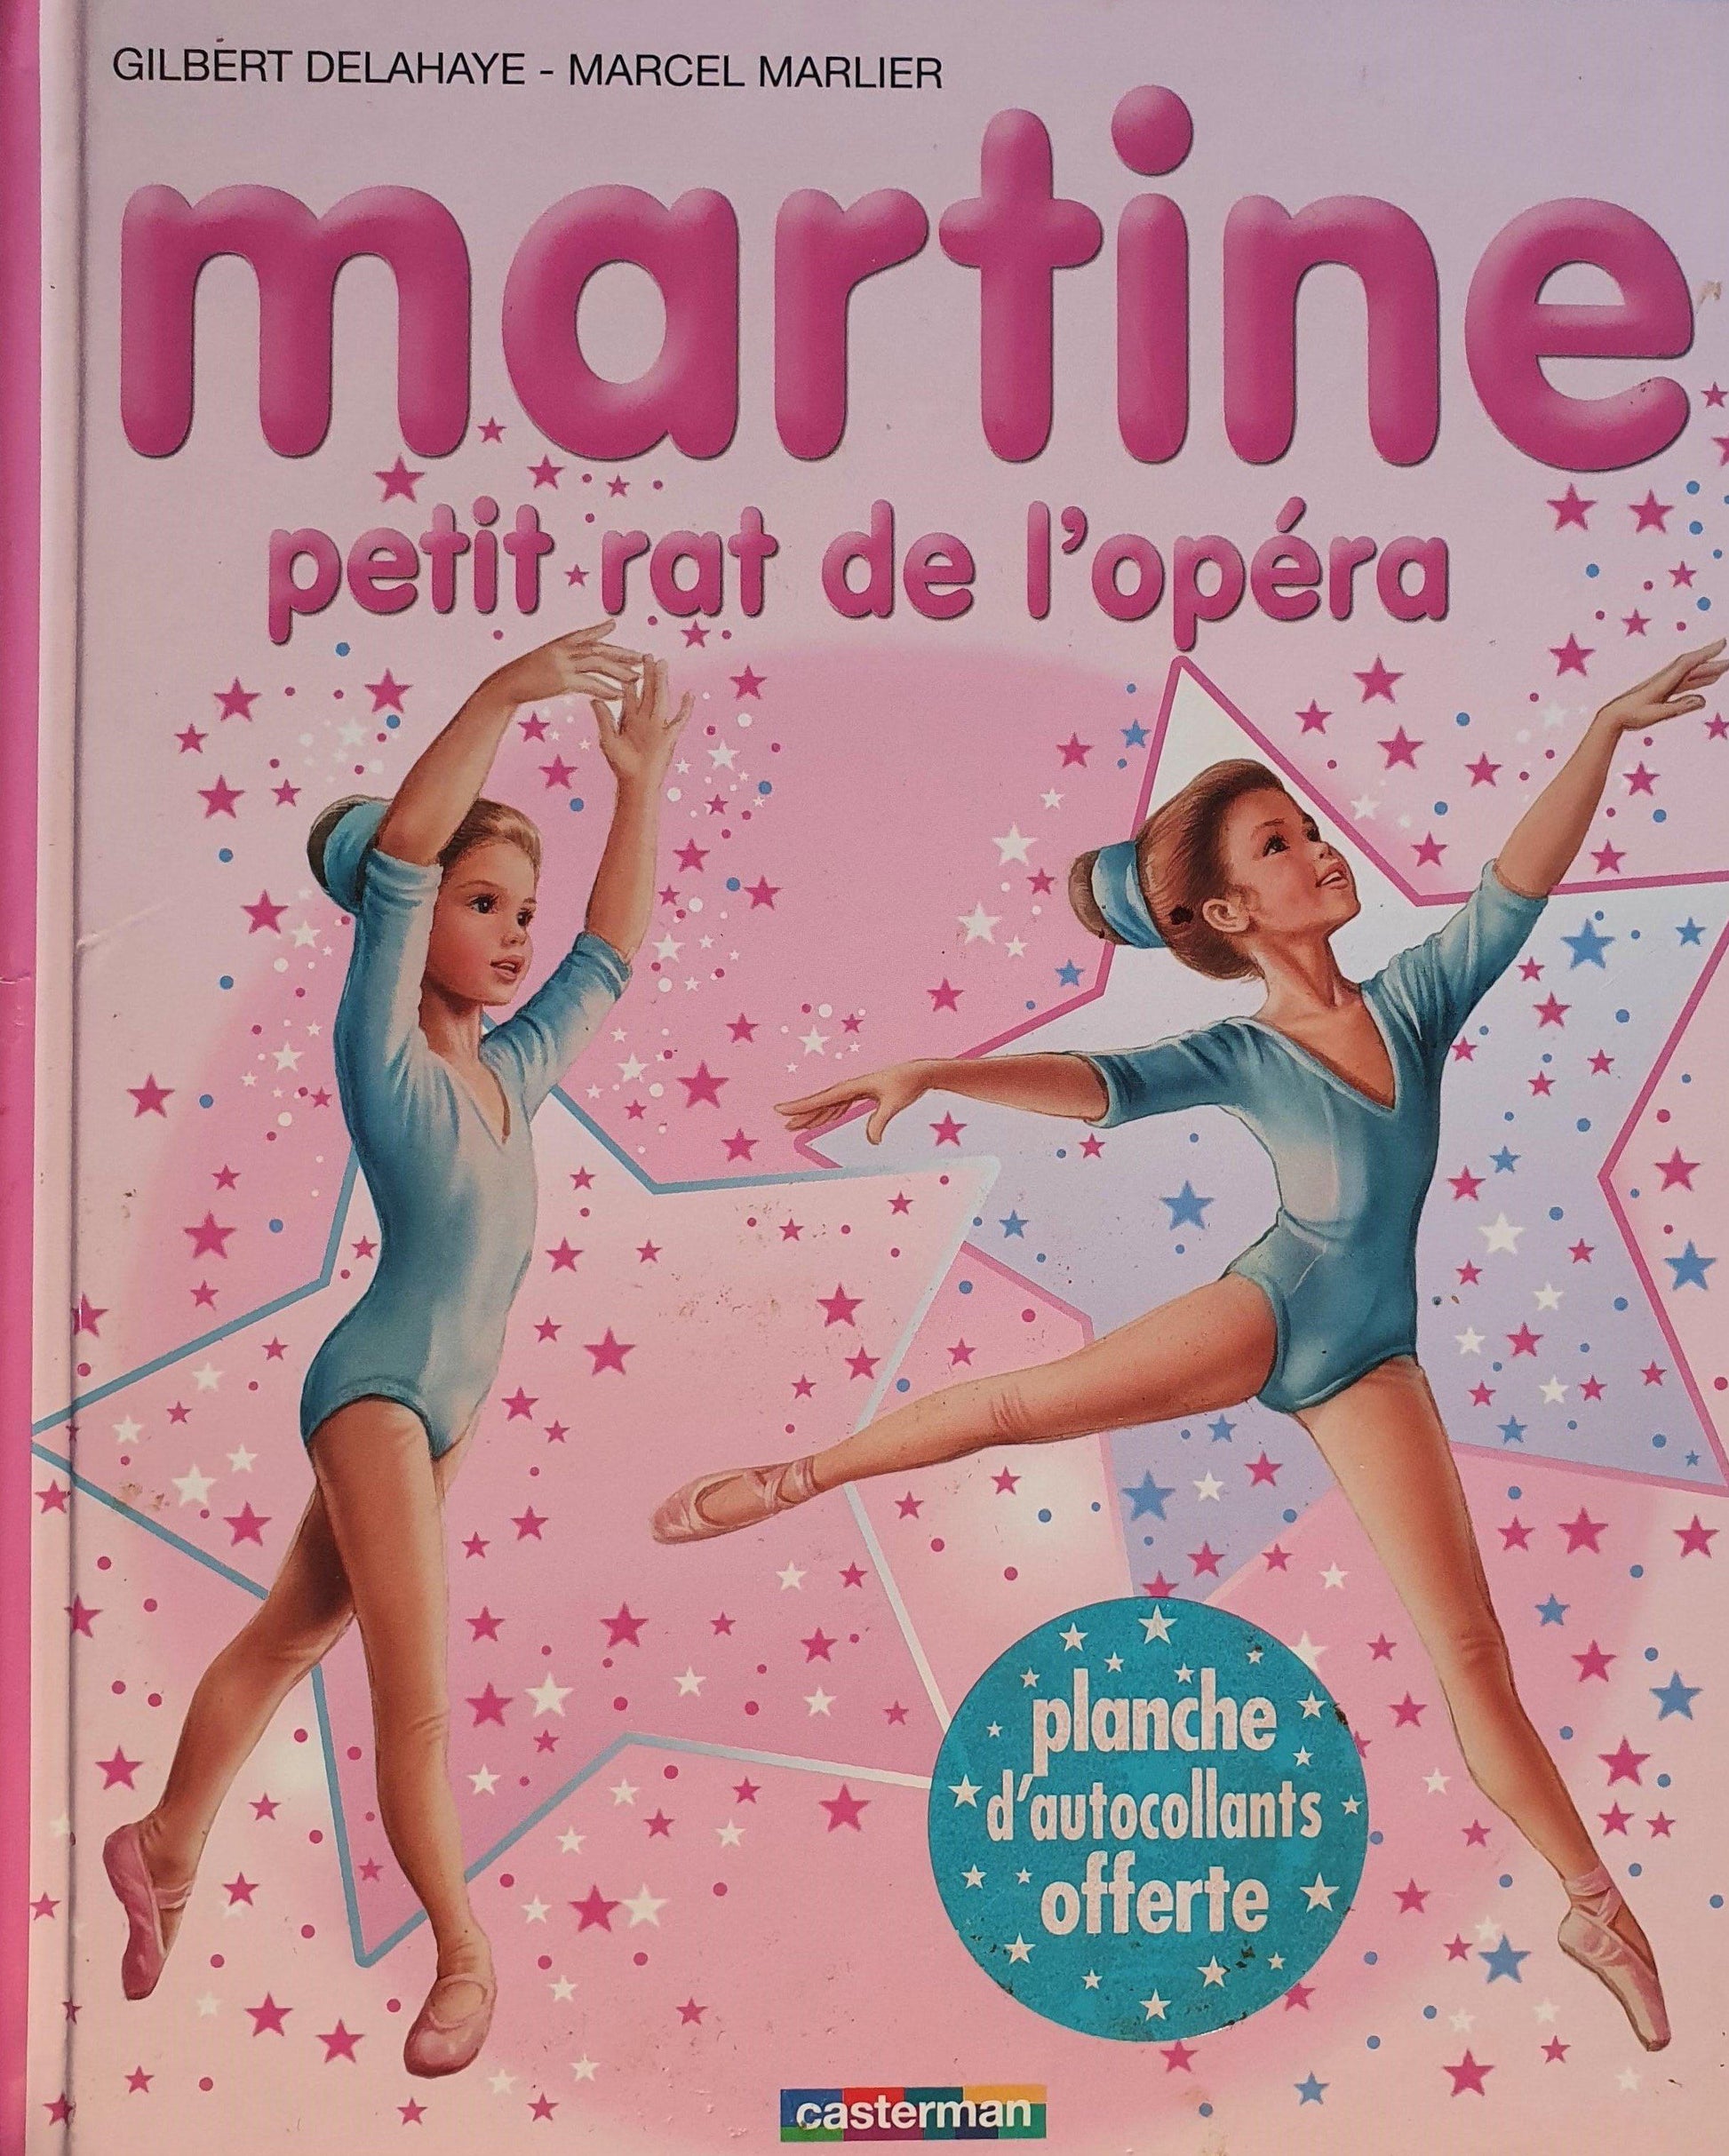 Martine, petit rat de l'Opéra Very Good Martine  (6070066675897)